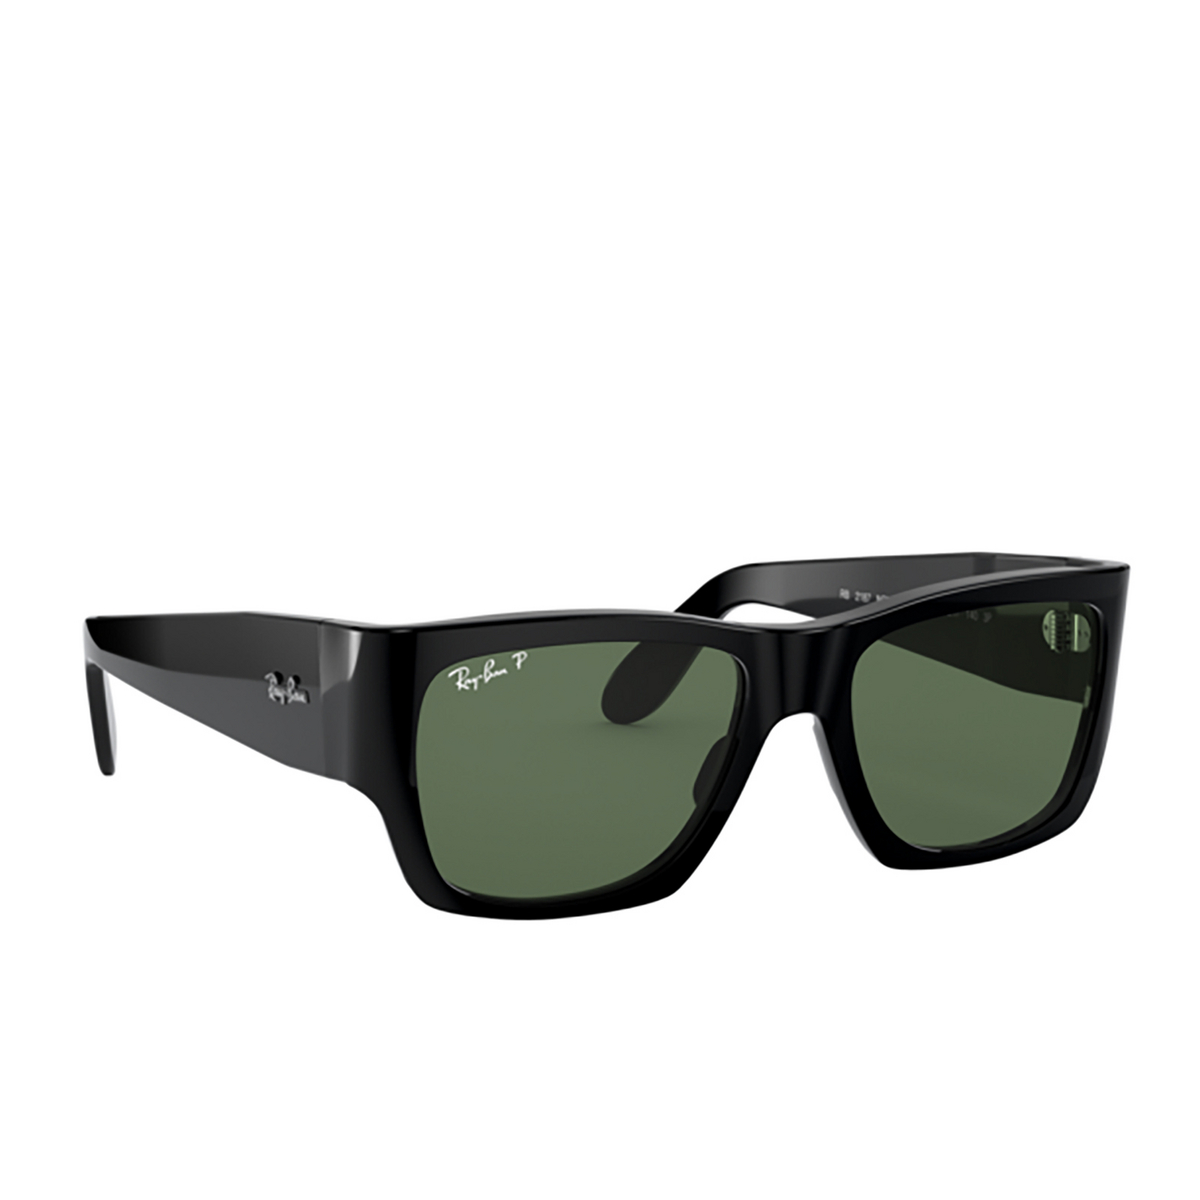 Ray-Ban WAYFARER NOMAD Sunglasses 901/58 BLACK - three-quarters view